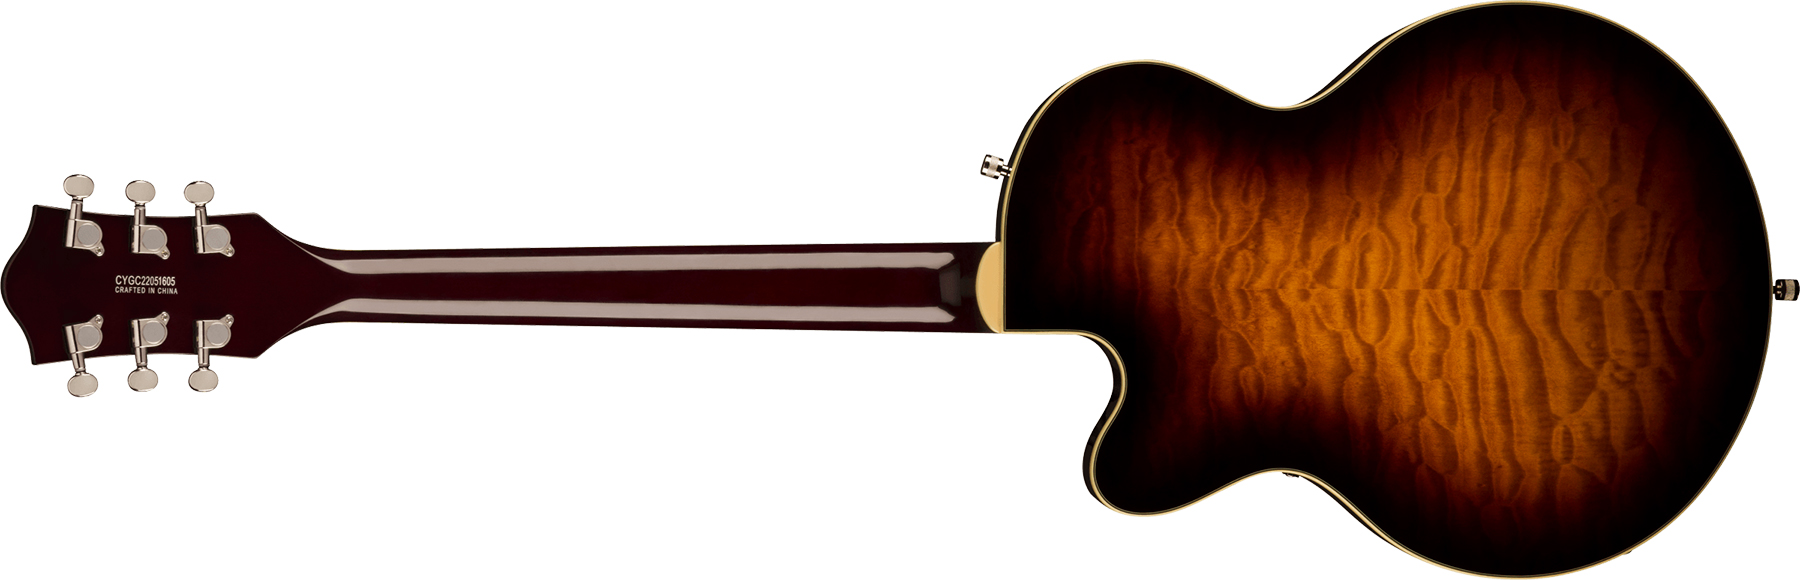 Gretsch G5655t-qm Electromatic Center Block Jr. Bigsby 2h Trem Lau - Sweet Tea - Semi-hollow electric guitar - Variation 1